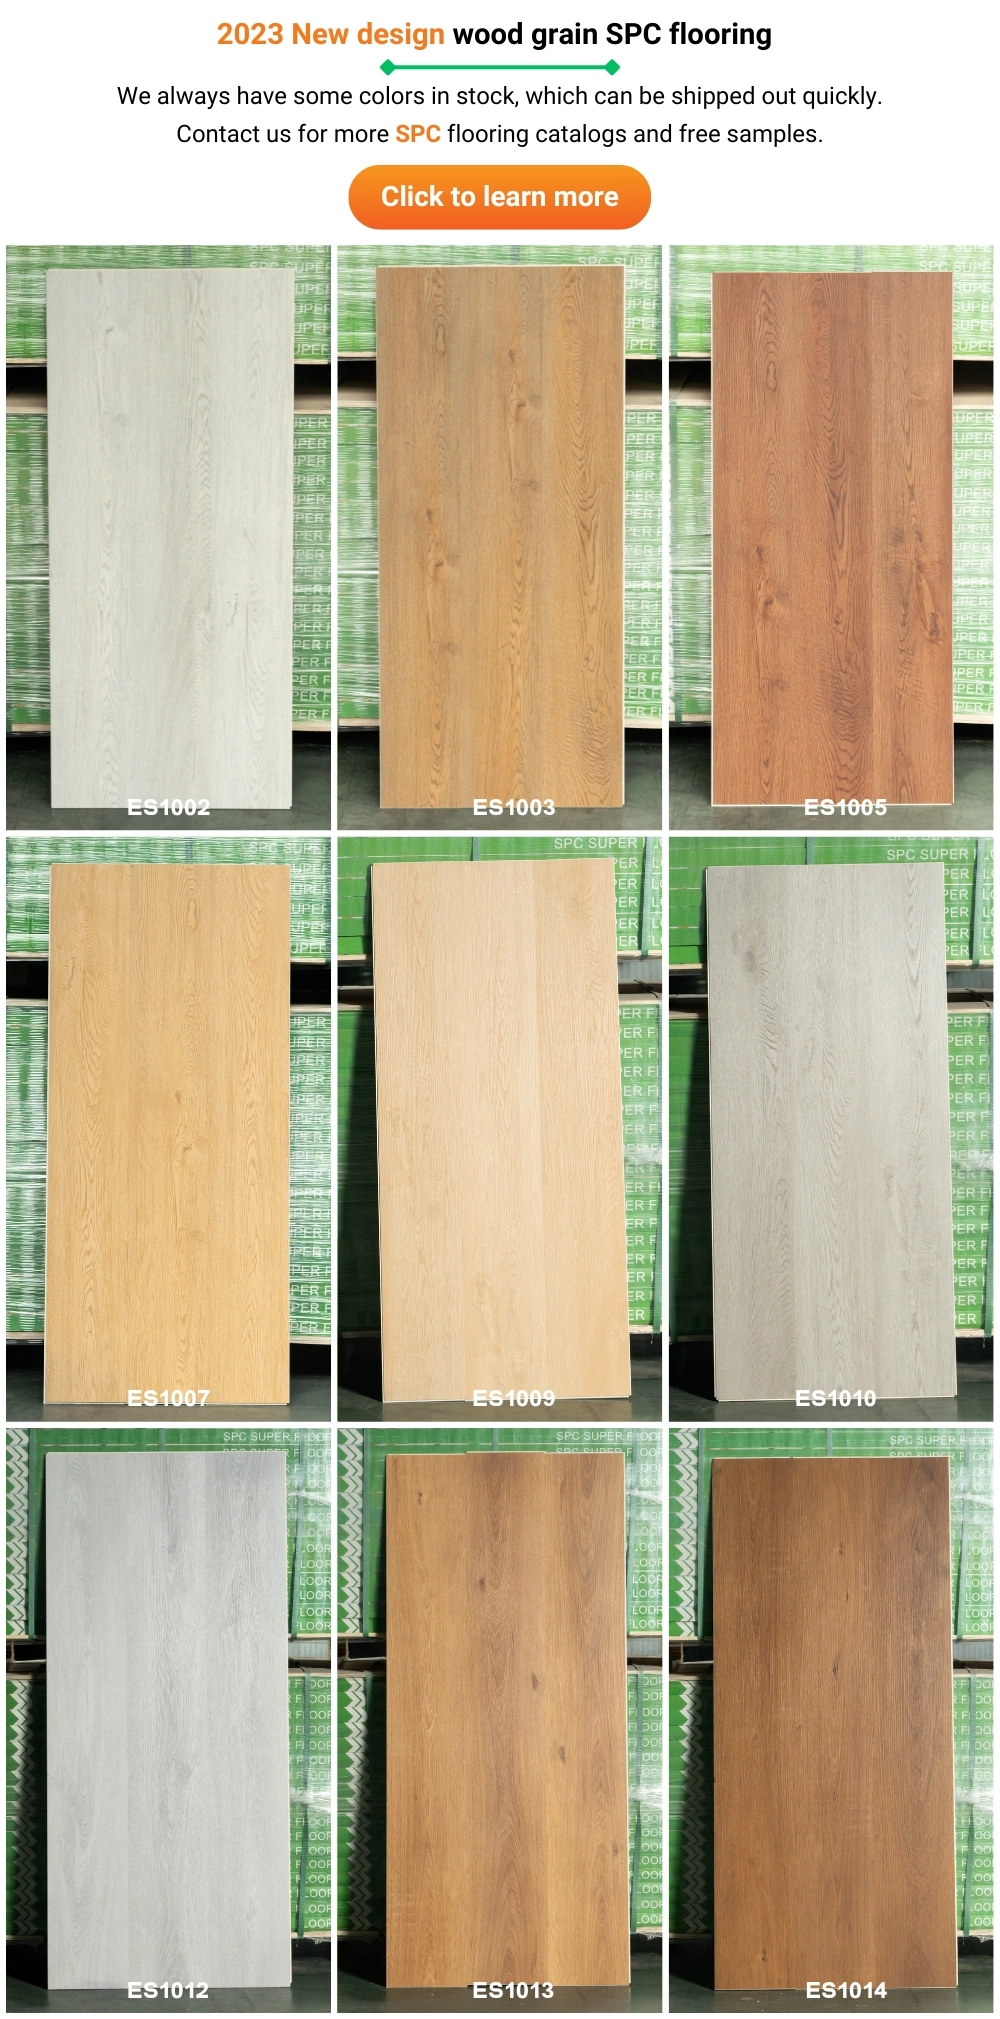 Waterproof Glazed/Polished Lvt/Jade Spc/PVC/Rubber/Ceramic/Porcelain Plastic/Wood/Wooden/Stone/Marble/Carpet Luxury Vinyl Floor/Wall/Ceiling Plank Tile